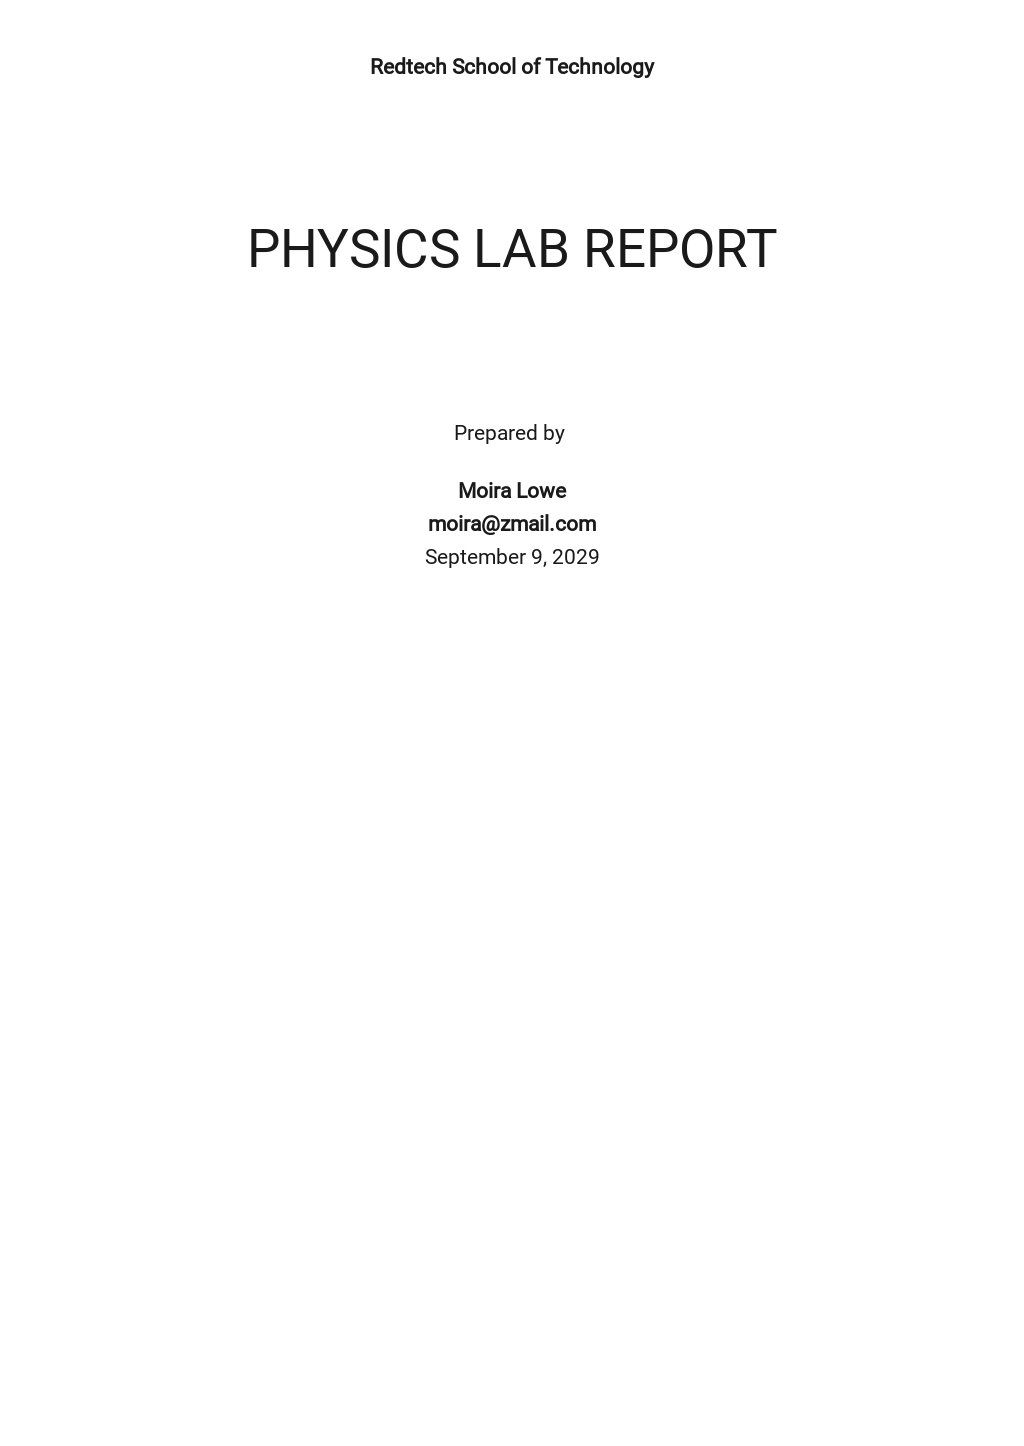 Physics Lab Report Template.jpe